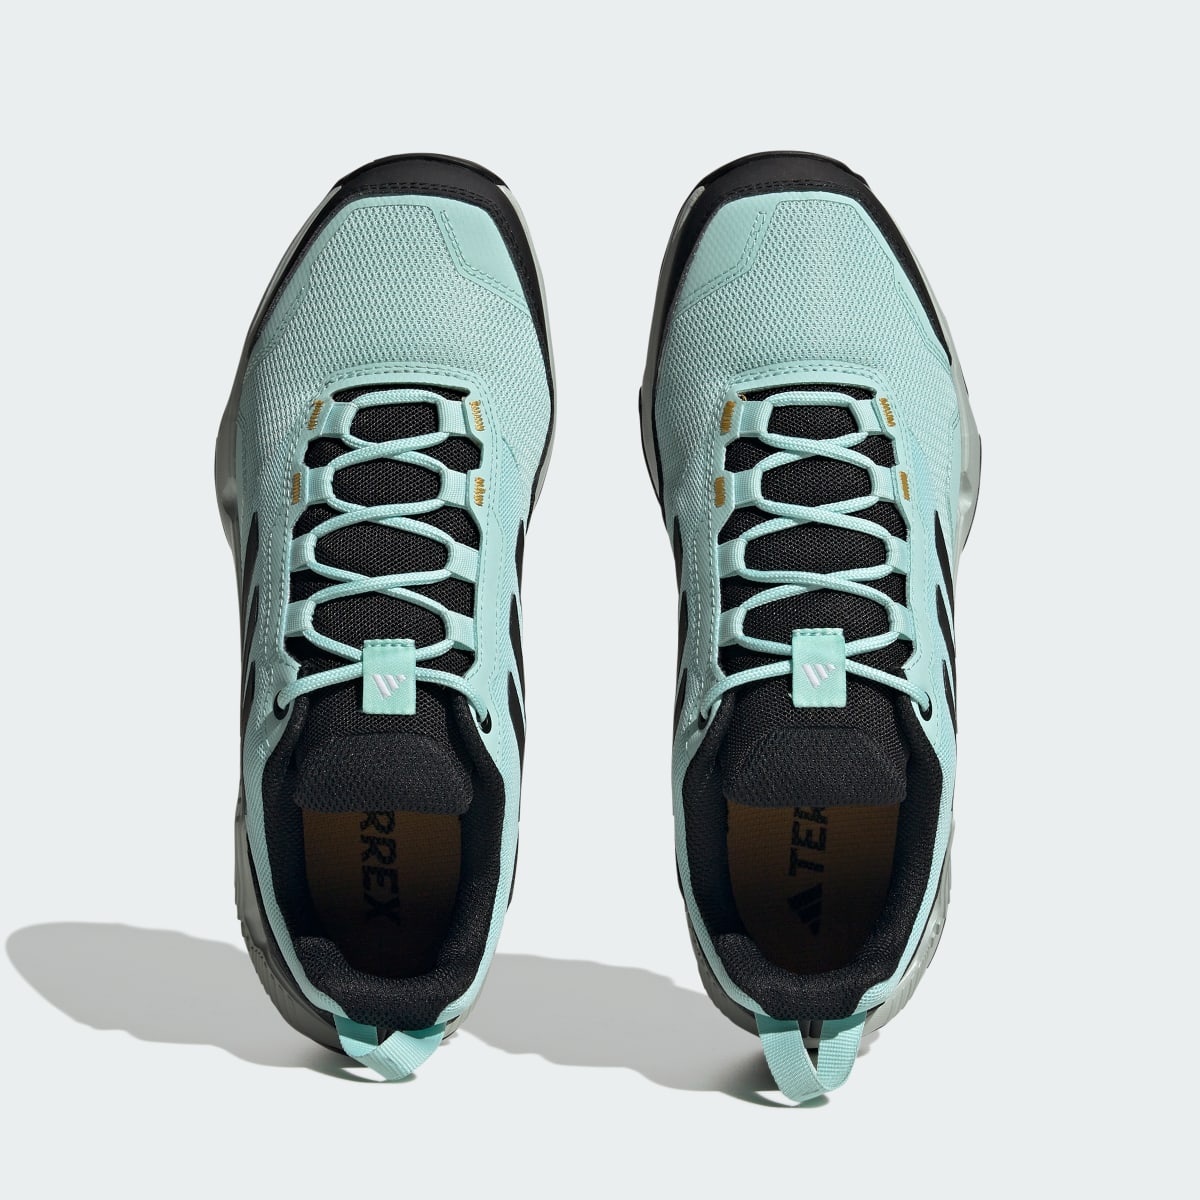 Adidas Eastrail 2.0 Hiking Shoes. 6